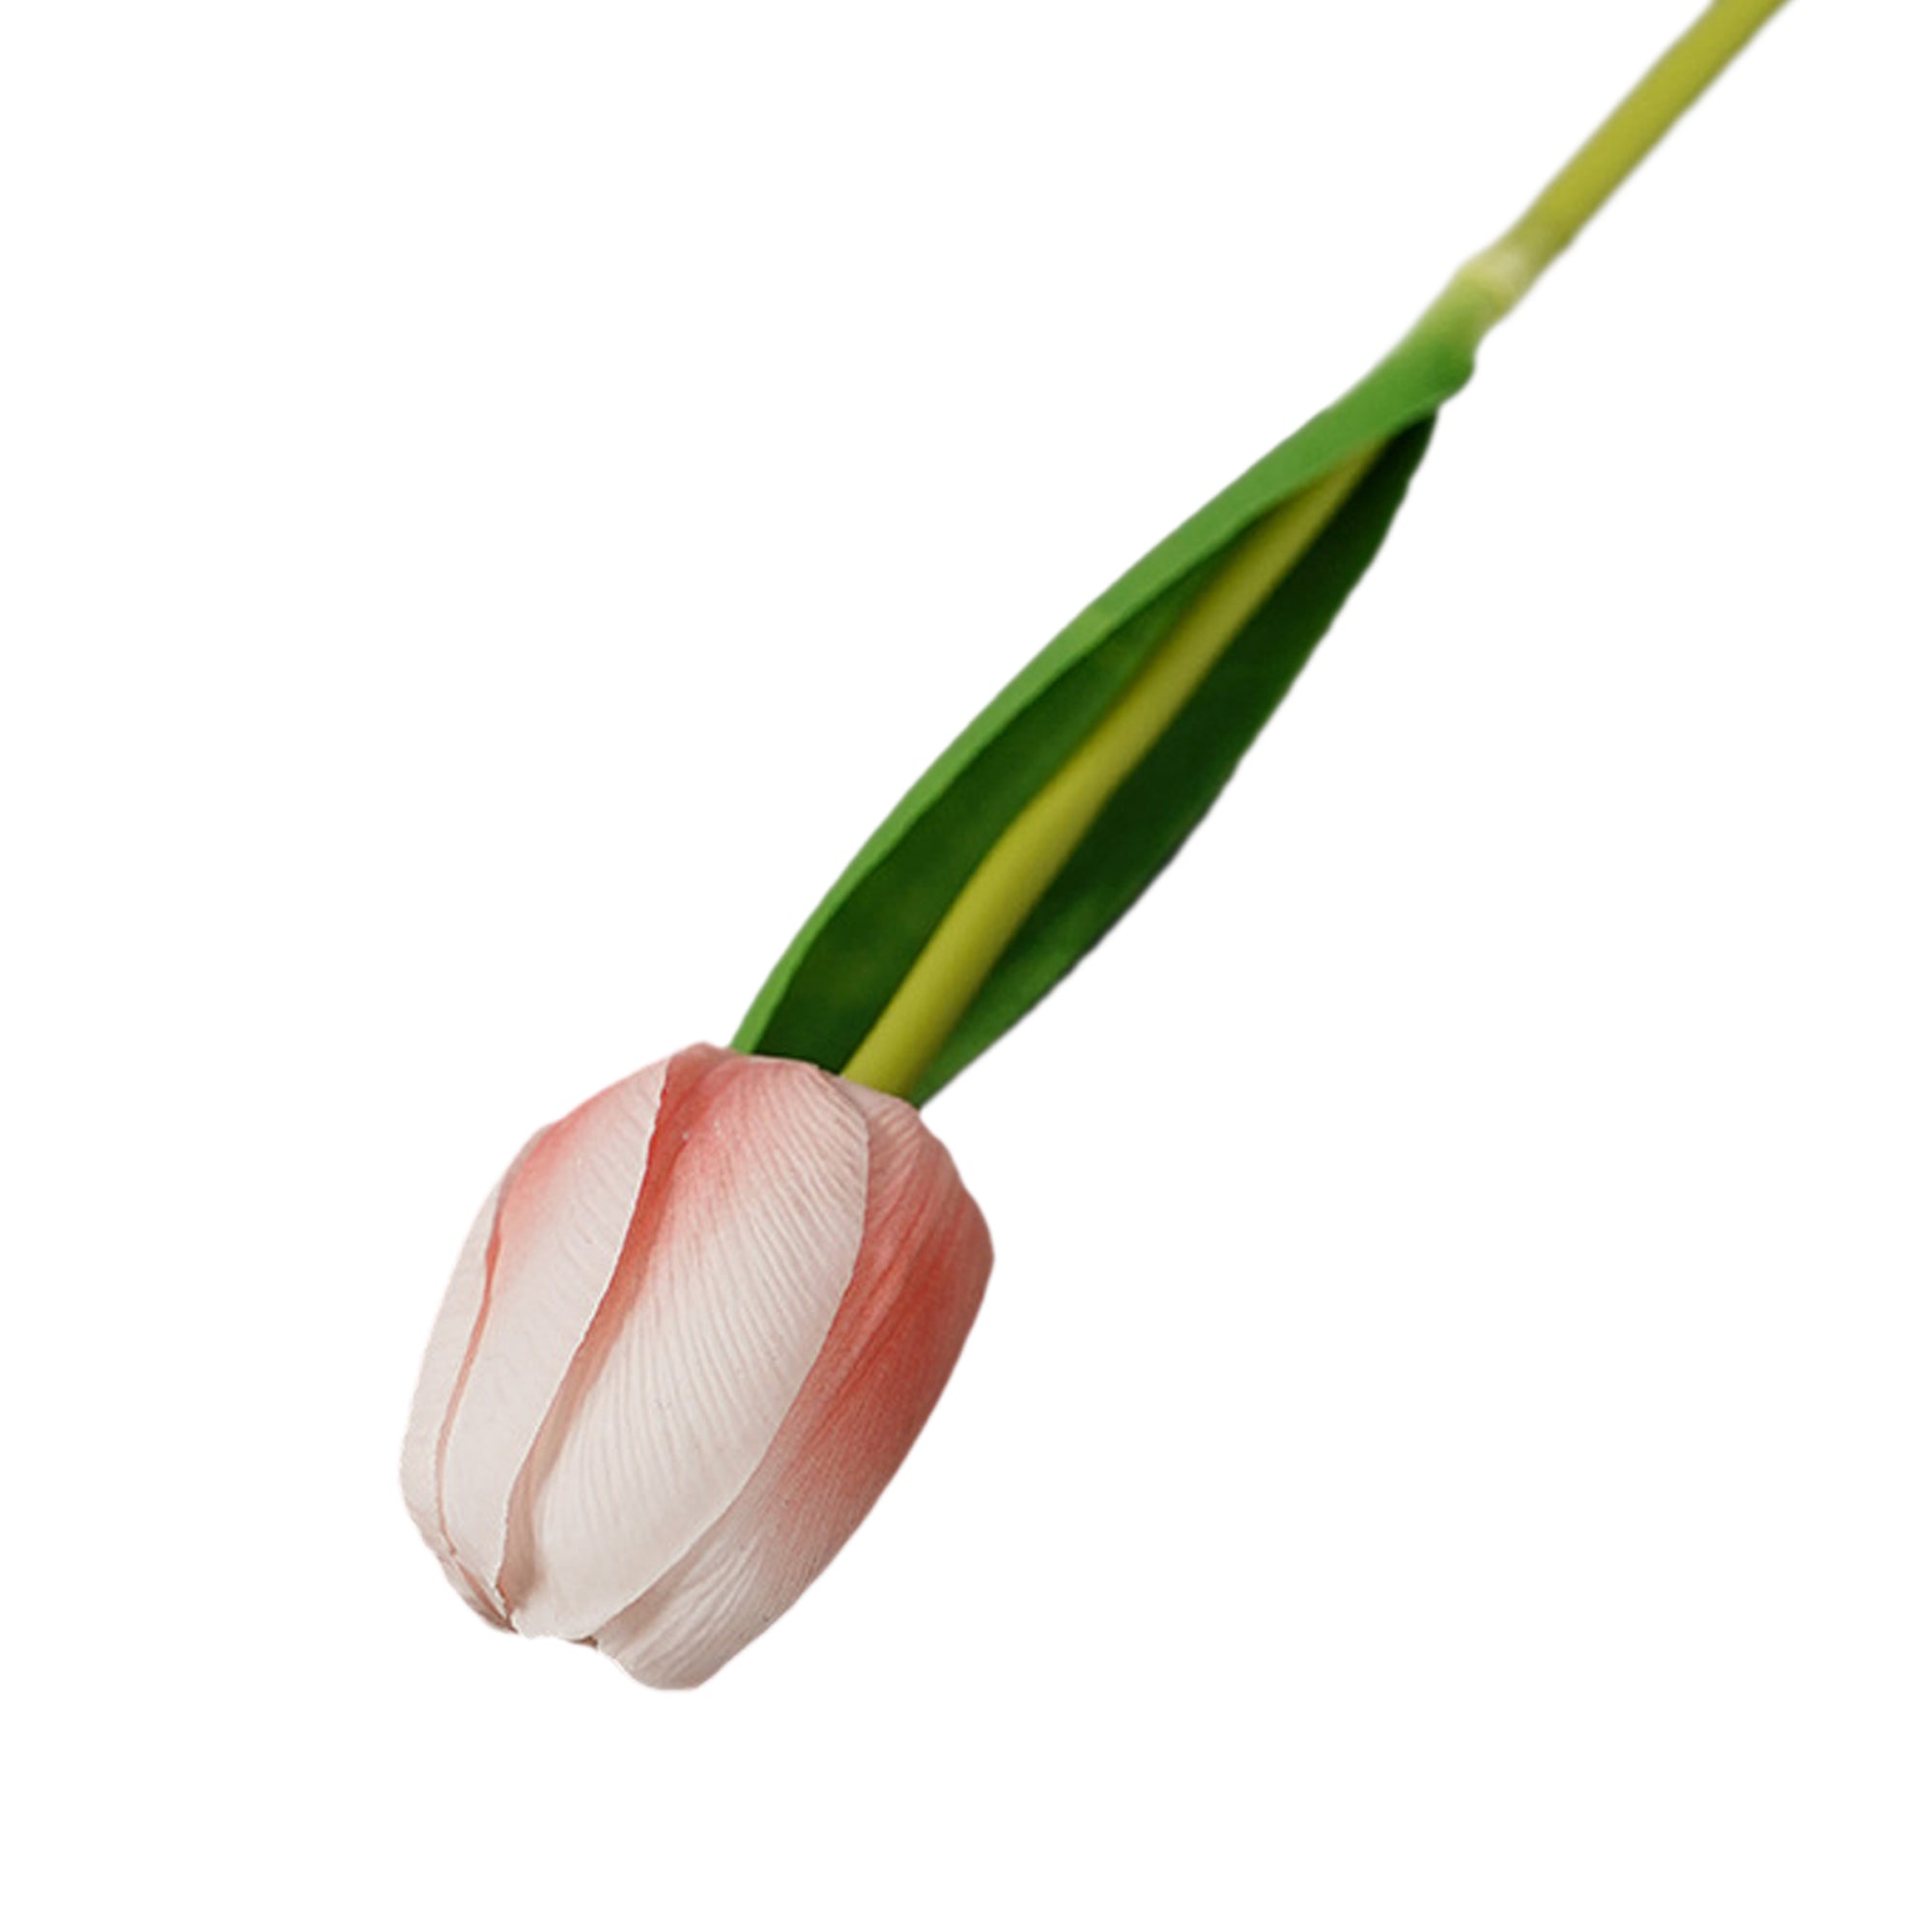 Artificial Tulips Real Touch Flower Arrangement